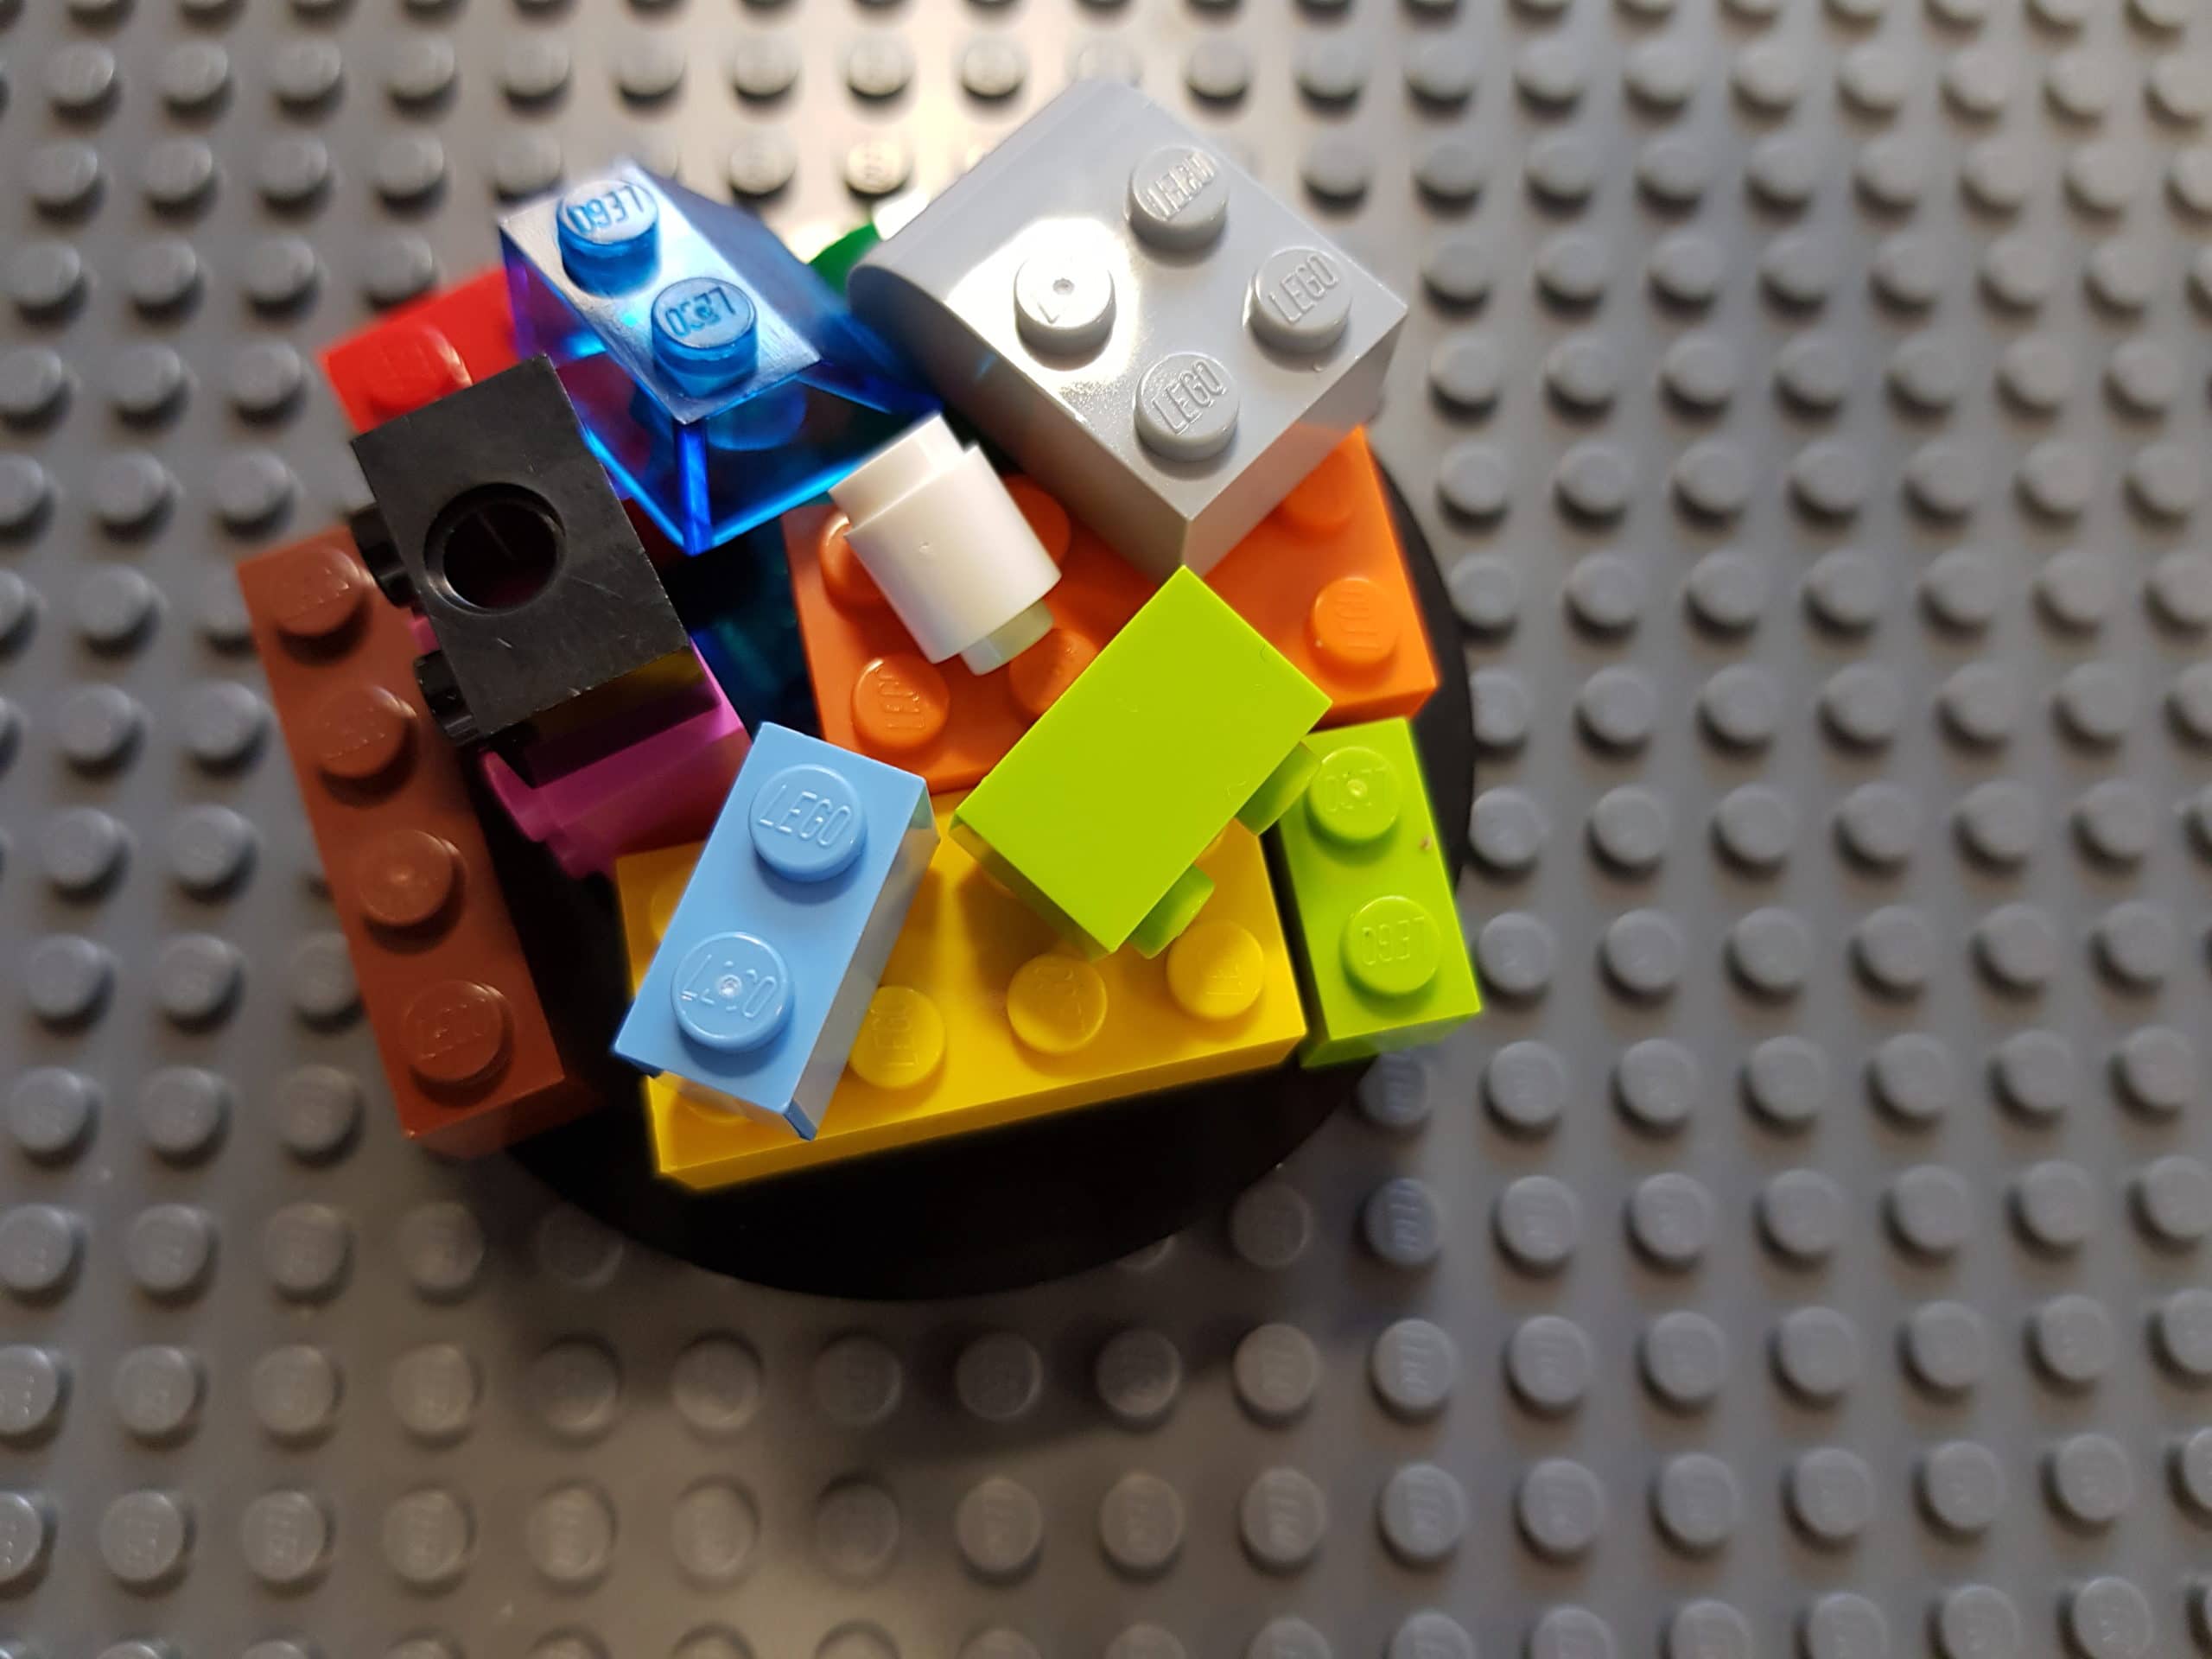 LEGO built